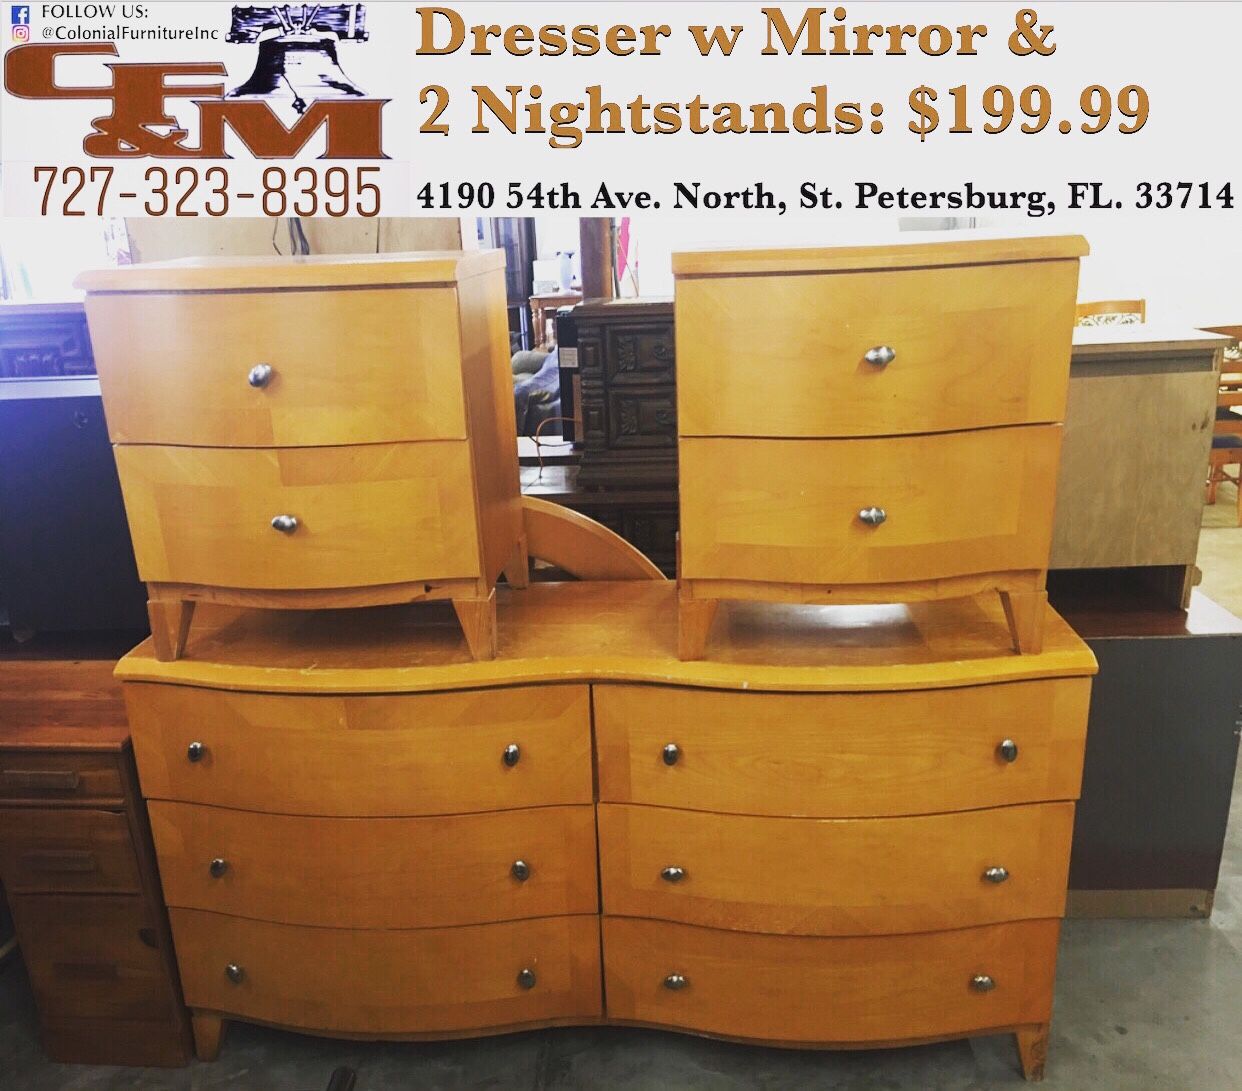 Dresser w/ Mirror & 2 Nightstands ONLY $199.99 (WE DELIVER)